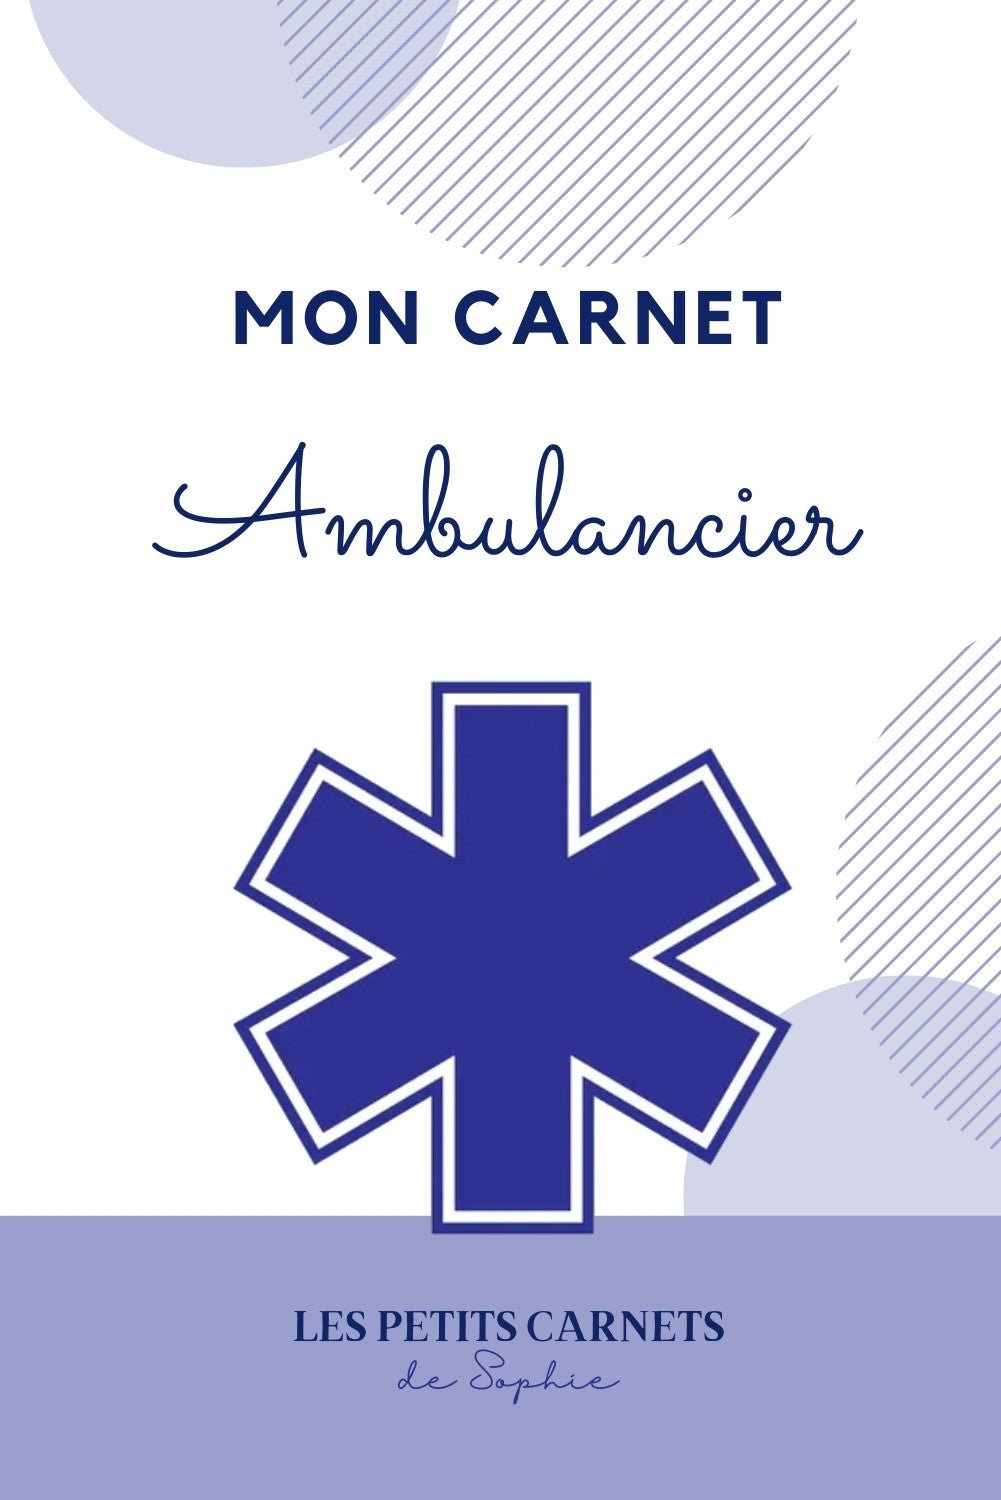 Mon carnet Ambulancière / Ambulancier